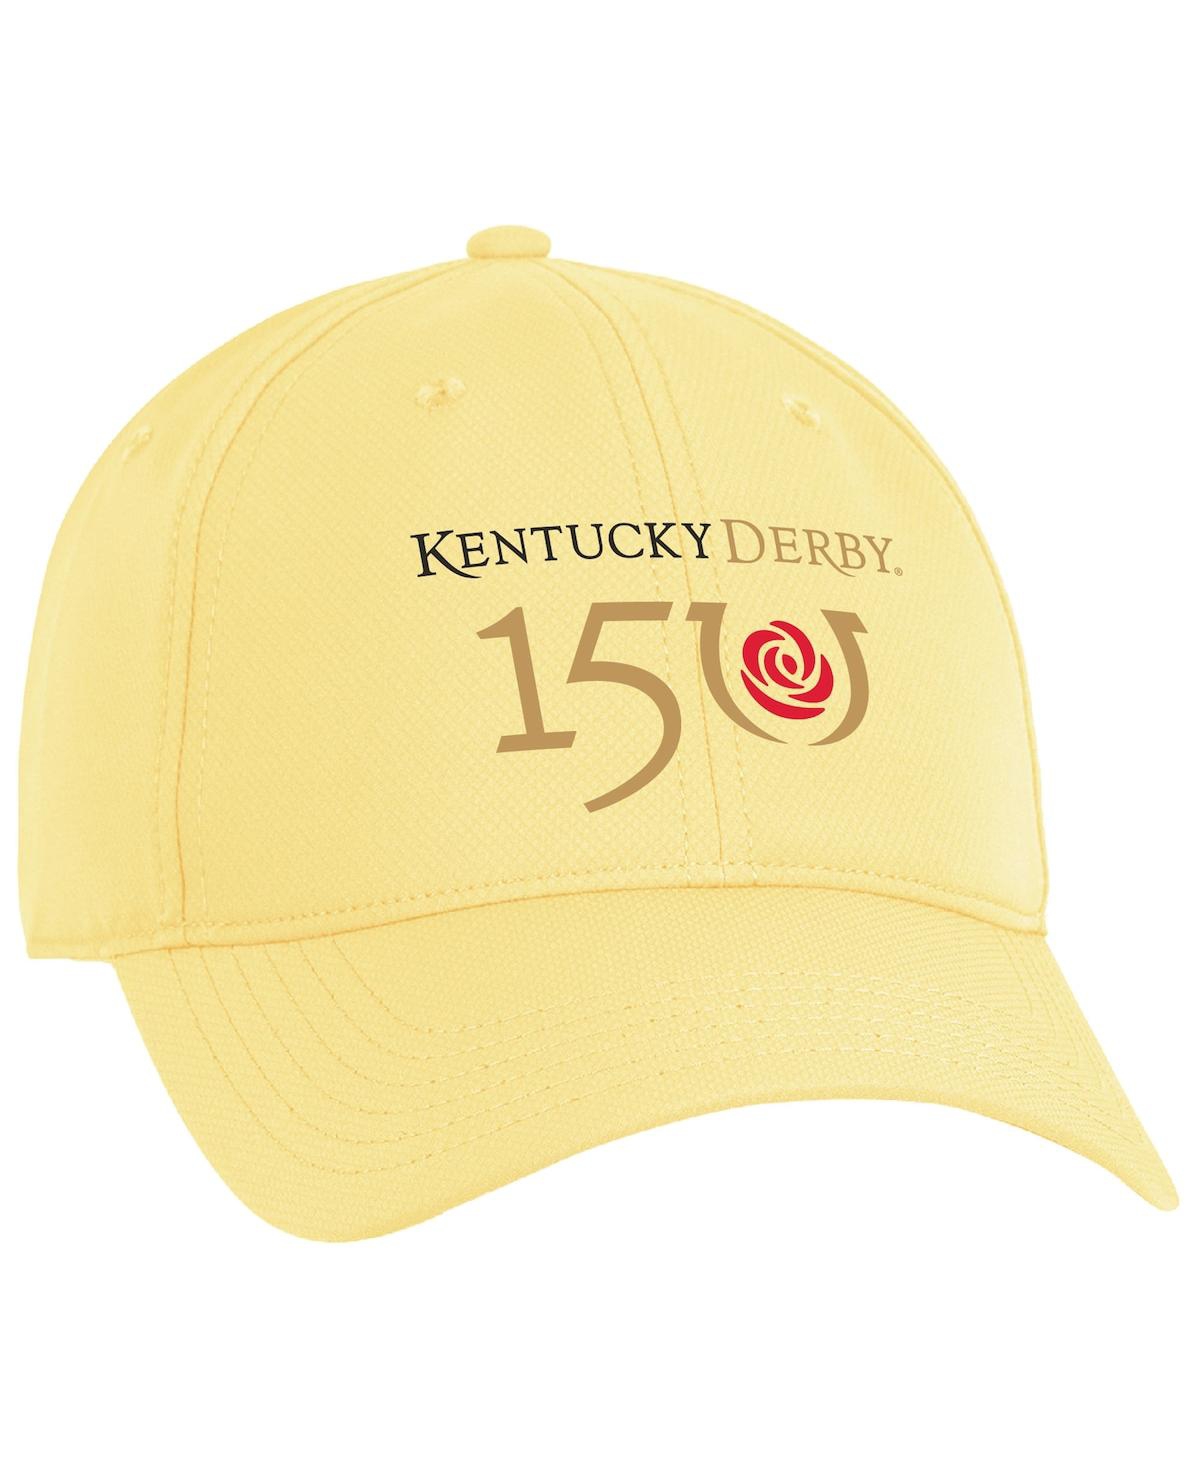 Men's Ahead Yellow Kentucky Derby 150 Frio Adjustable Hat - Yellow